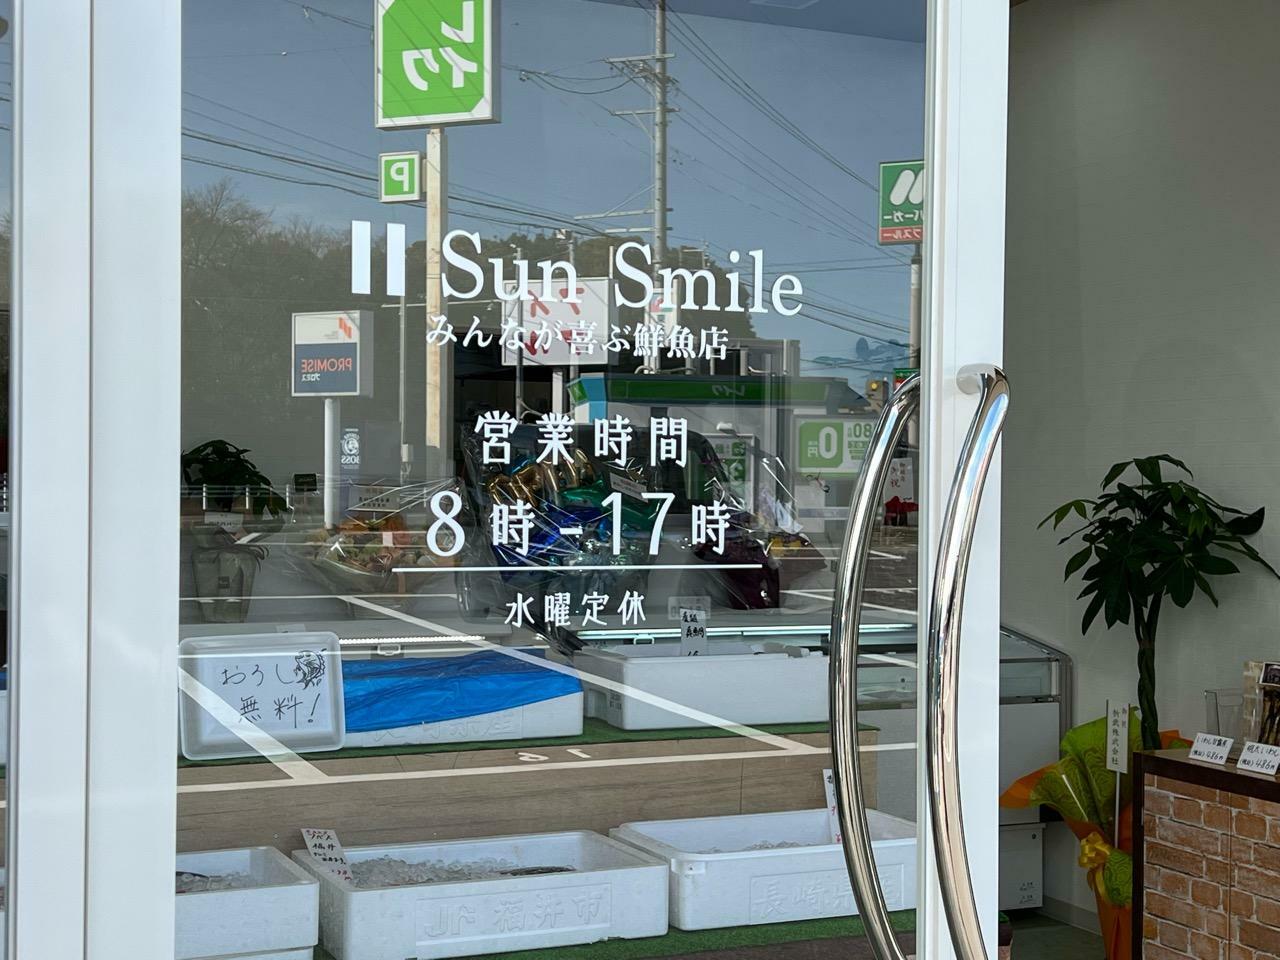 「Sun Smile みんなが喜ぶ鮮魚店」